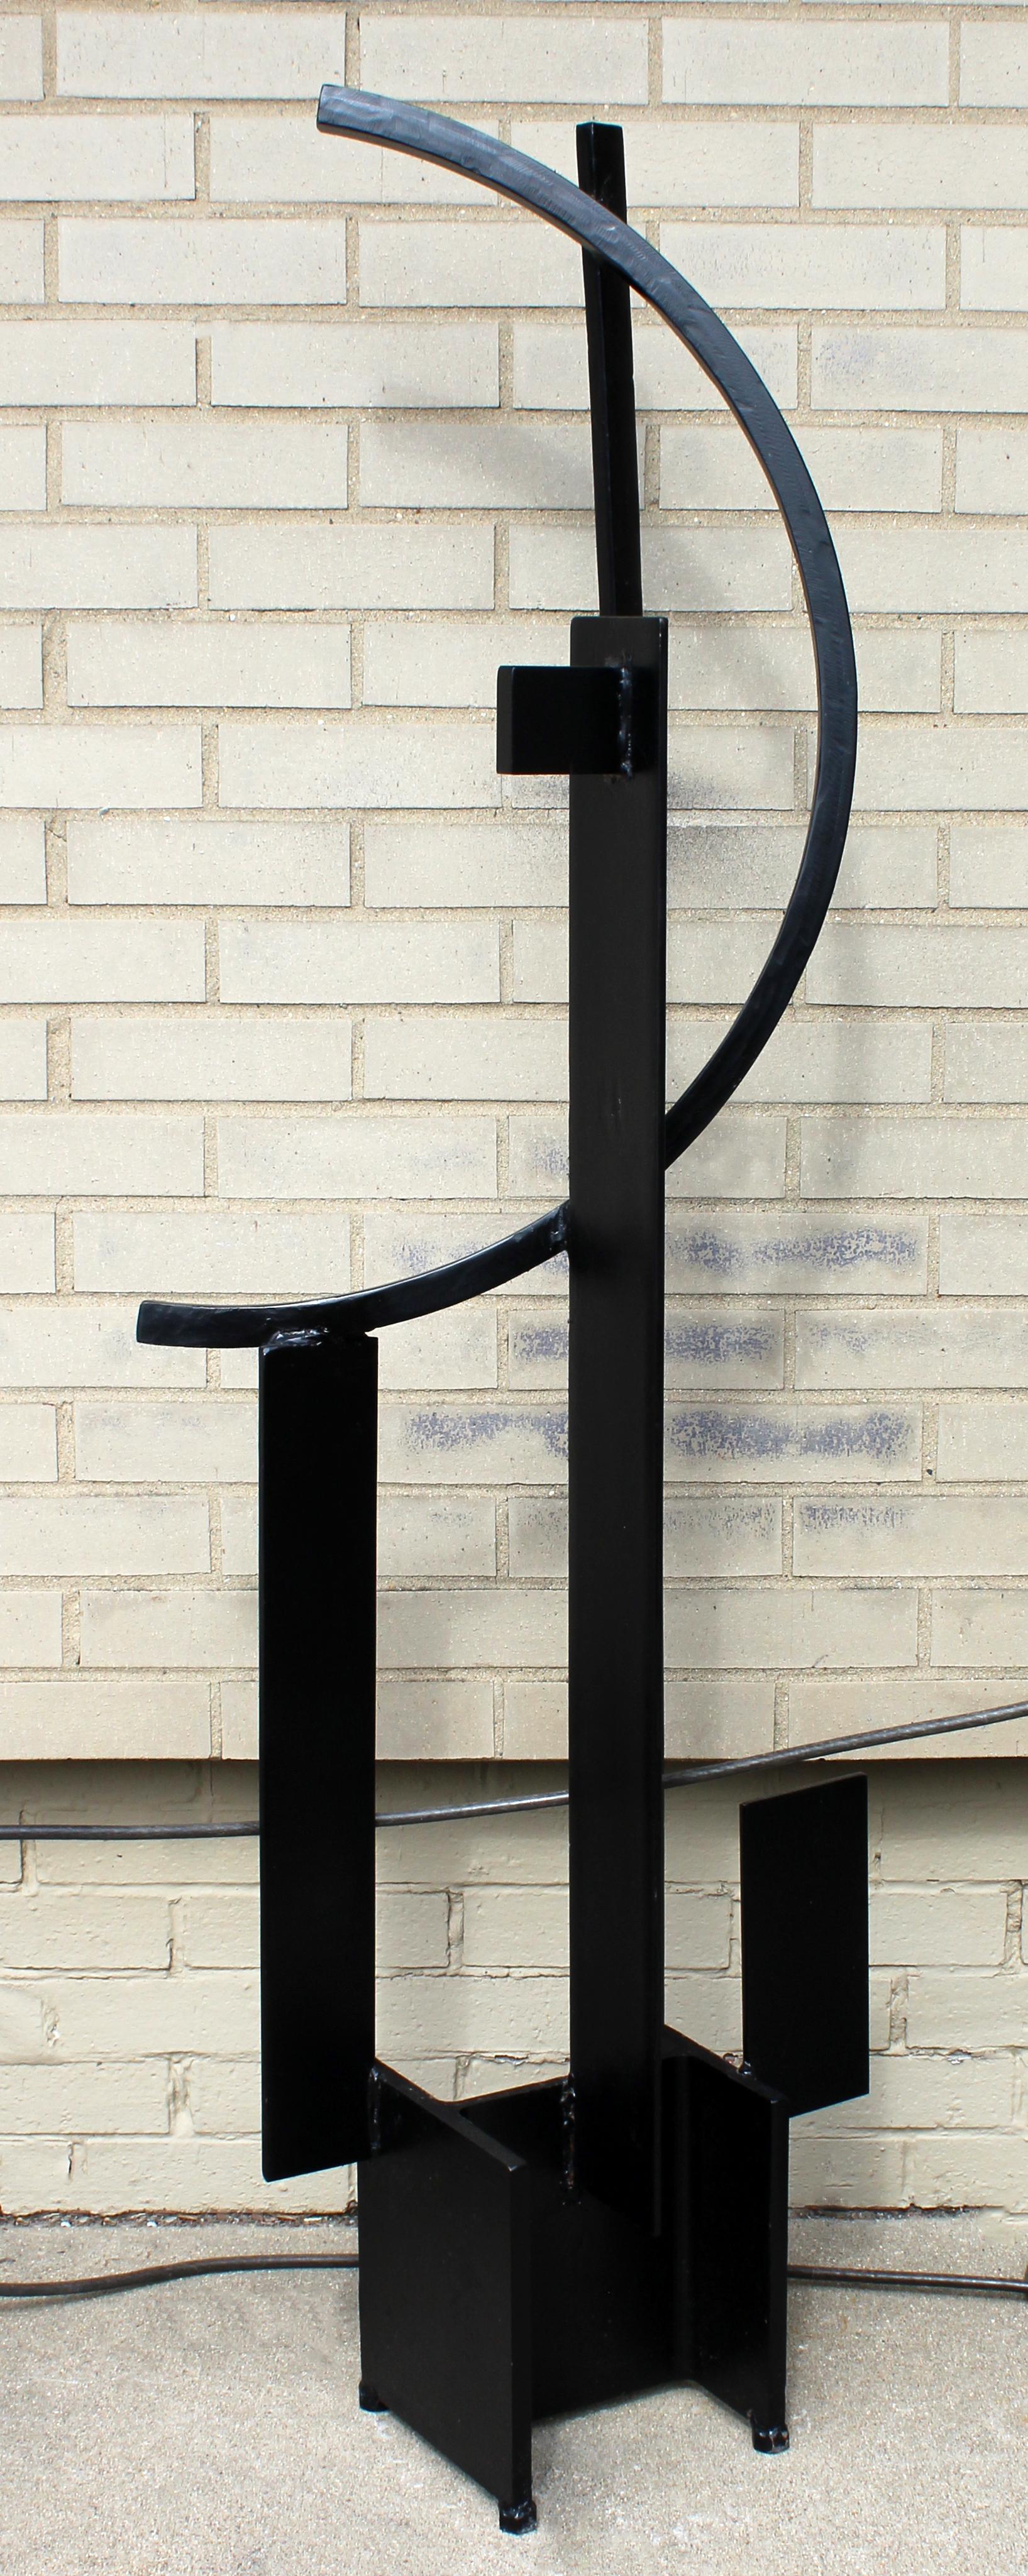 American Contemporary Forged Iron Black Abstract Art Floor Sculpture by Robert Hansen